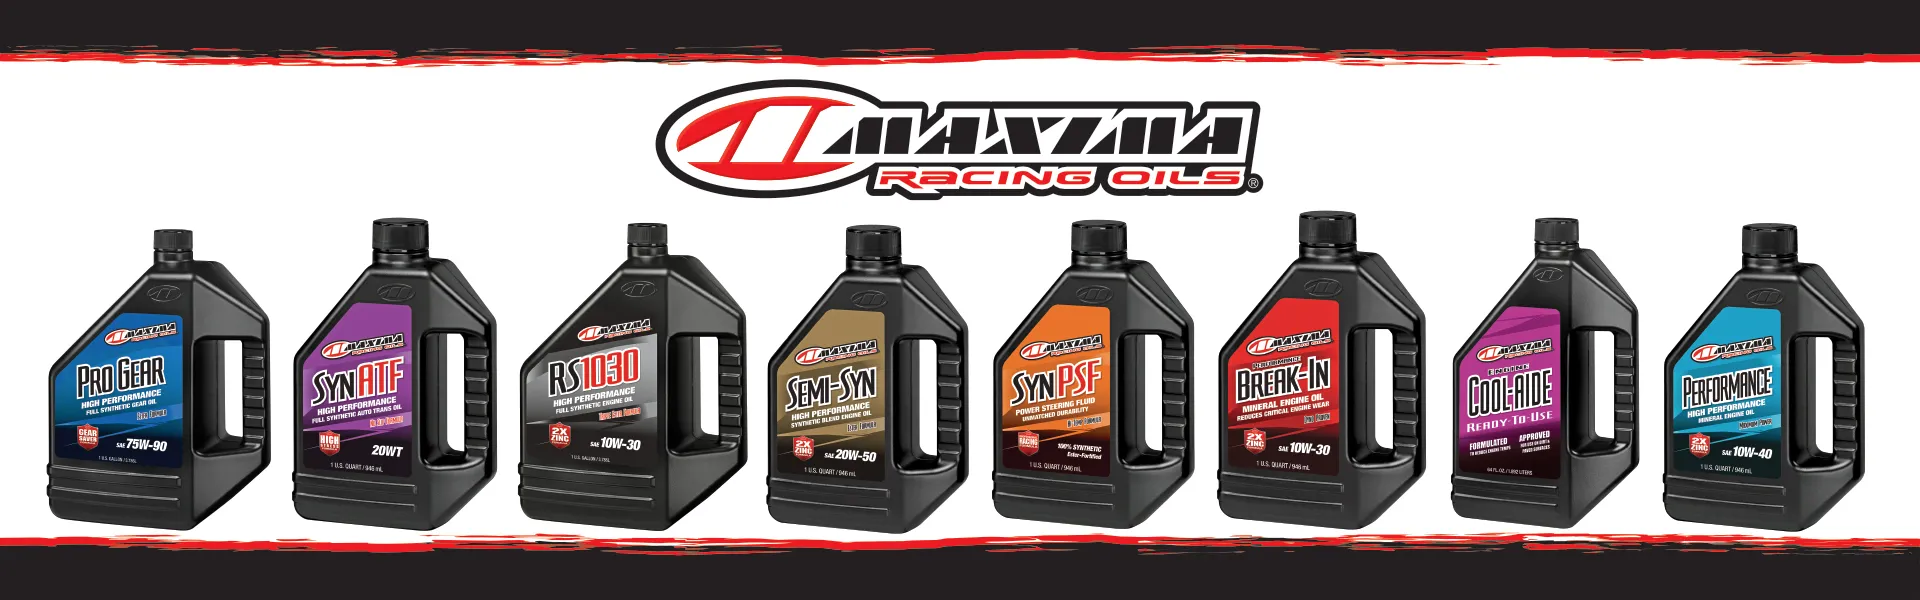 Maxima Racing Oils at Day Motor Sports